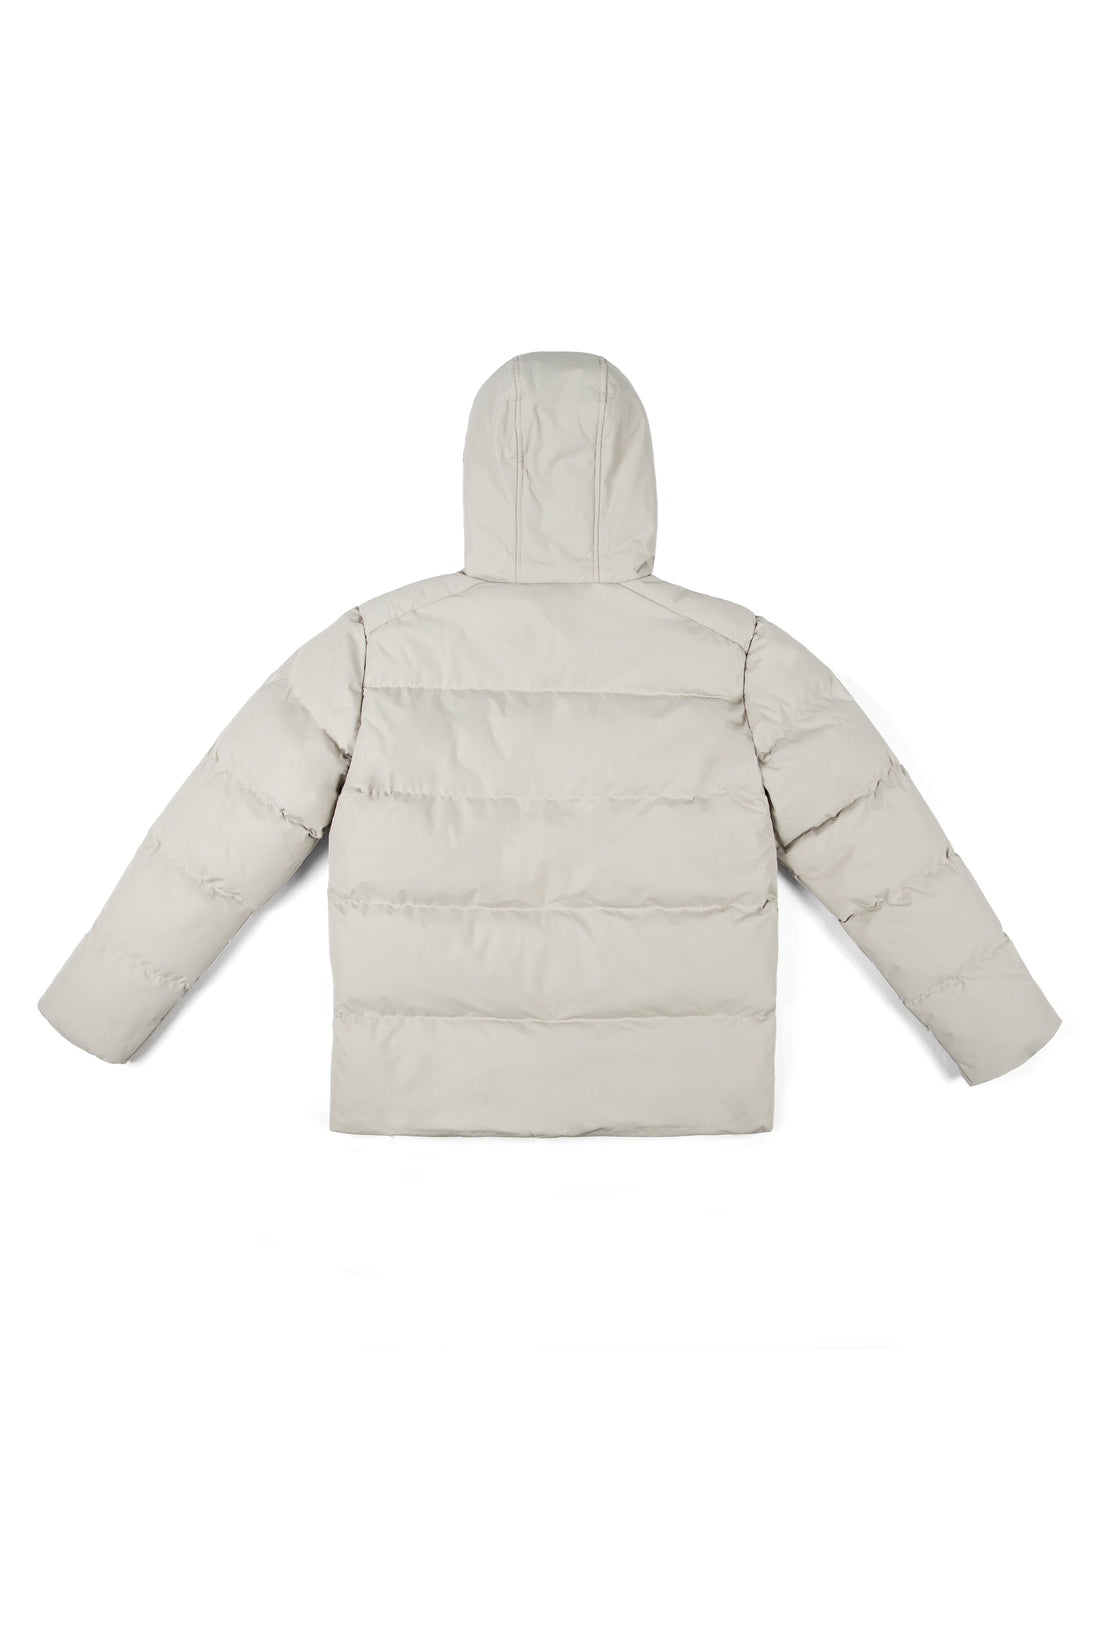 Buy Monte Carlo Women White Cotton Blend Solid Jacket online